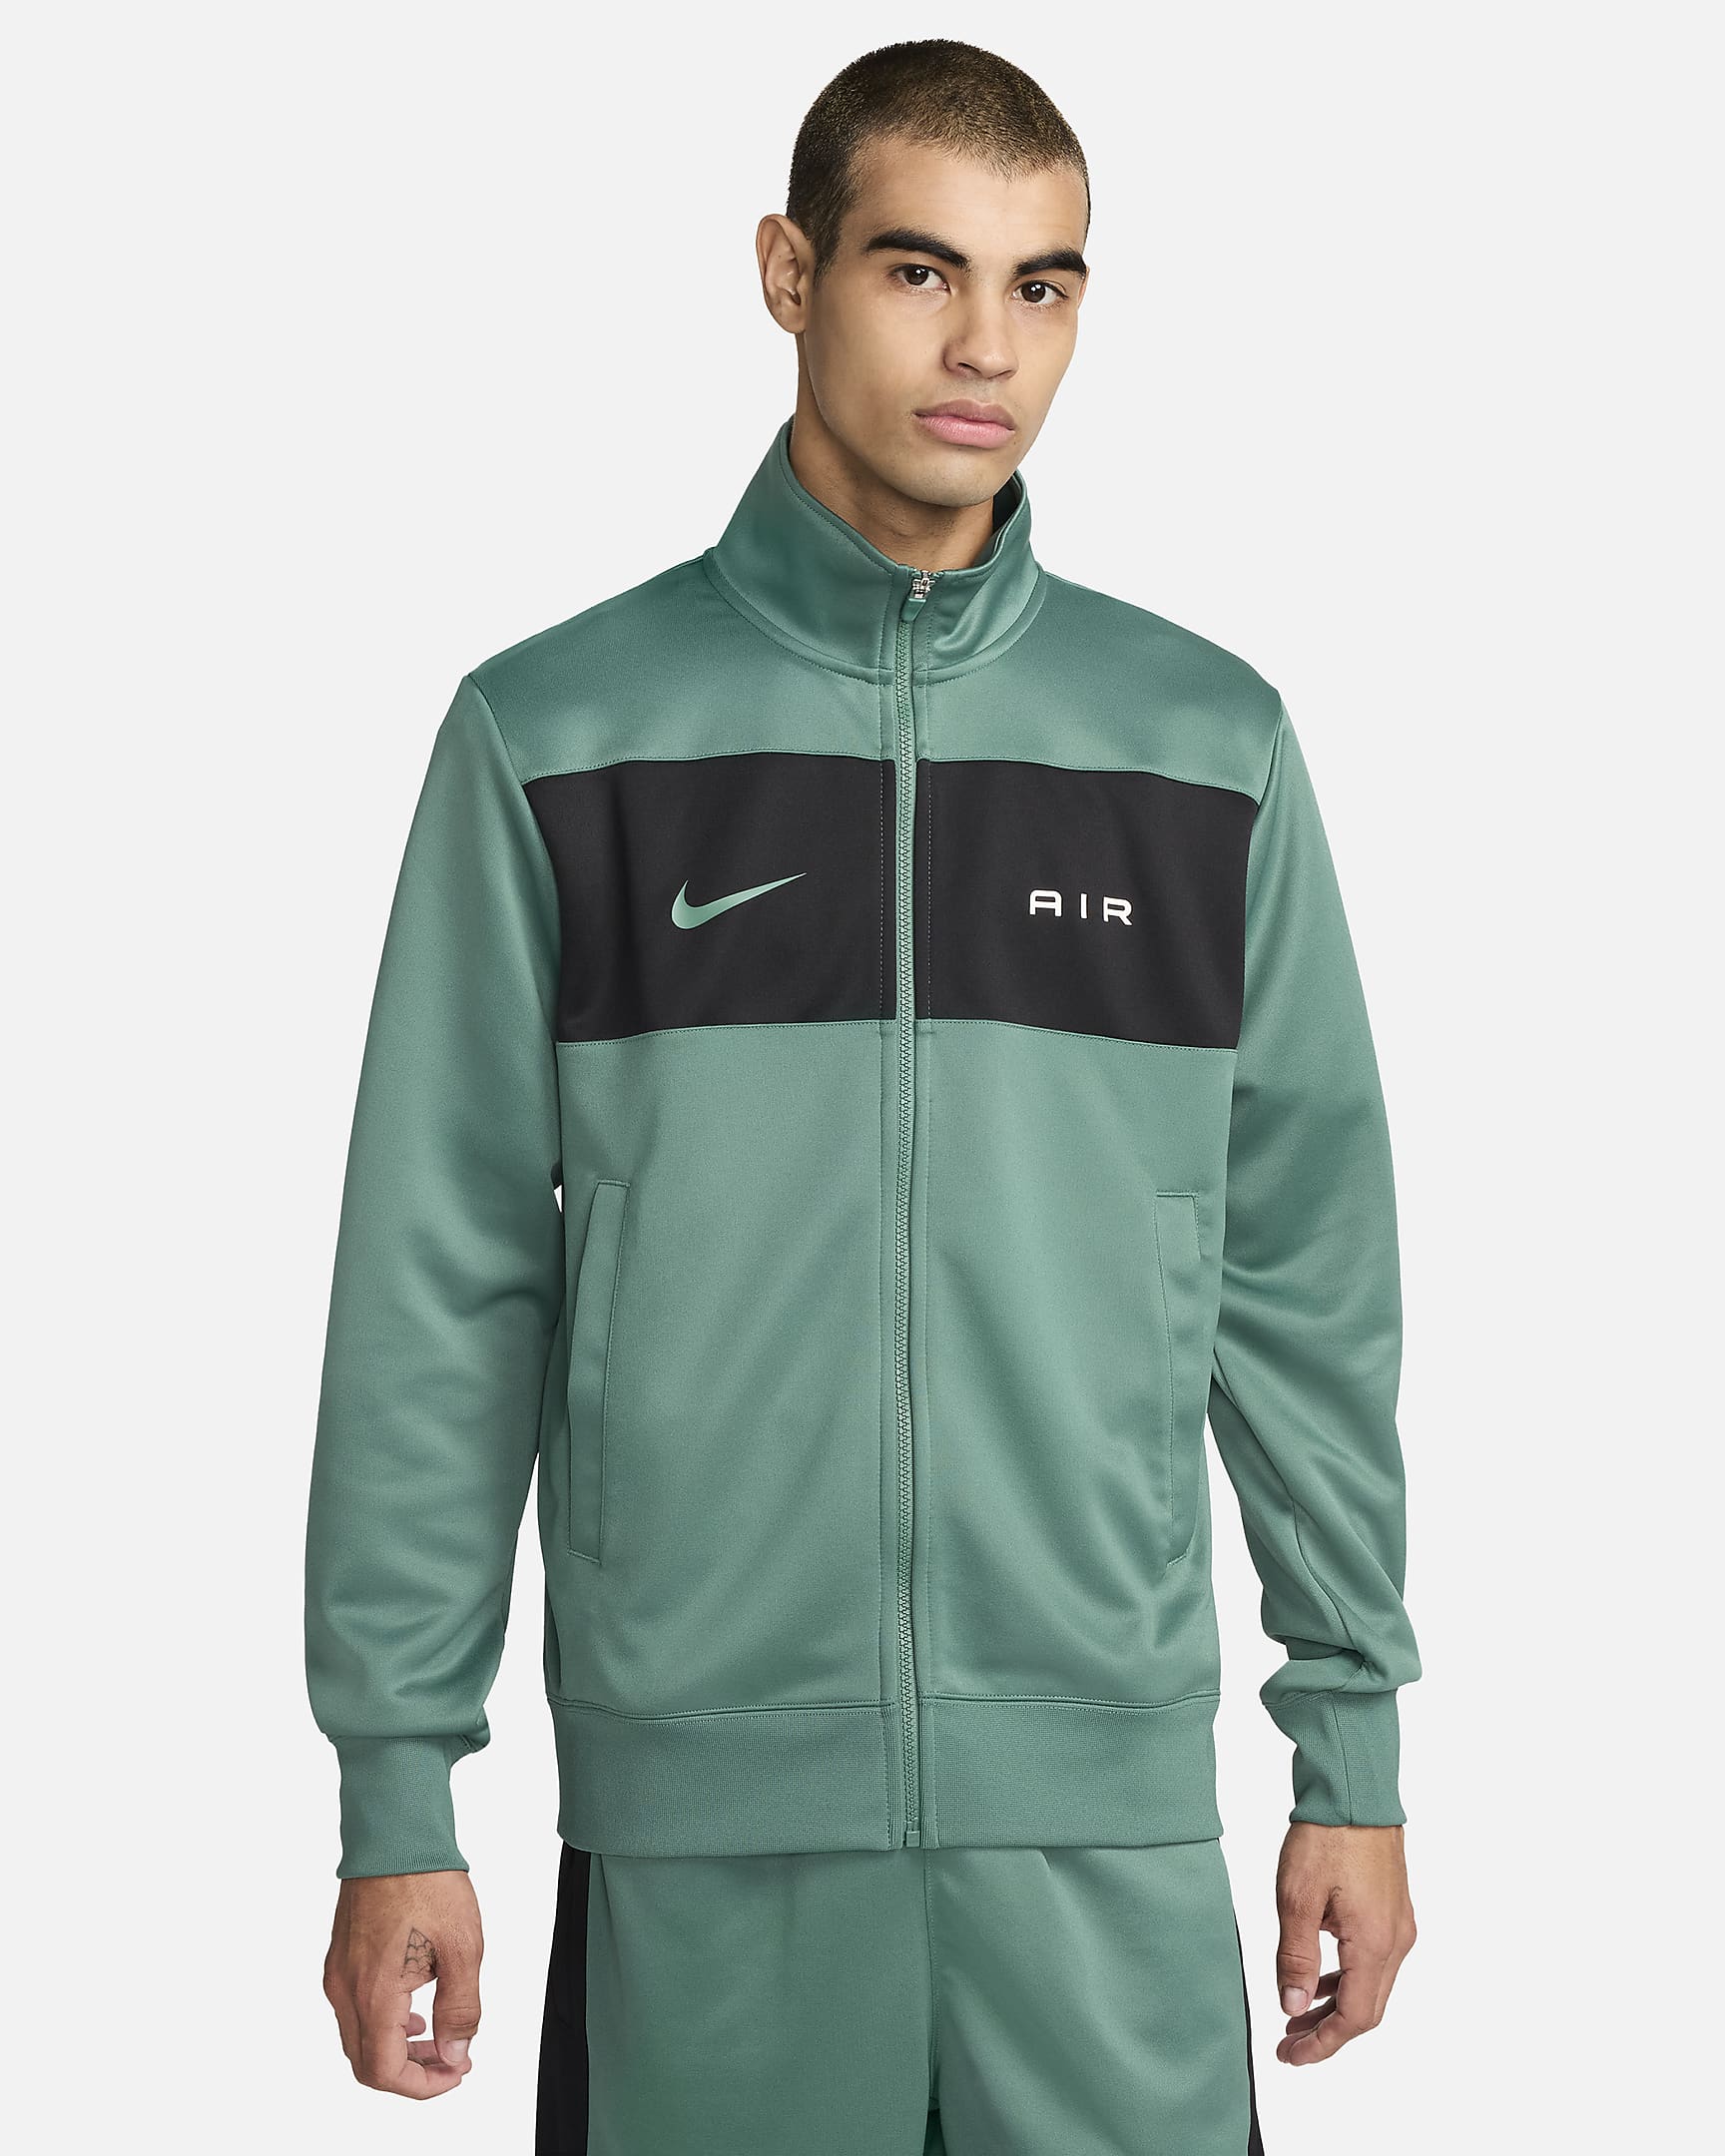 Nike Air Men's Tracksuit Jacket. Nike AU